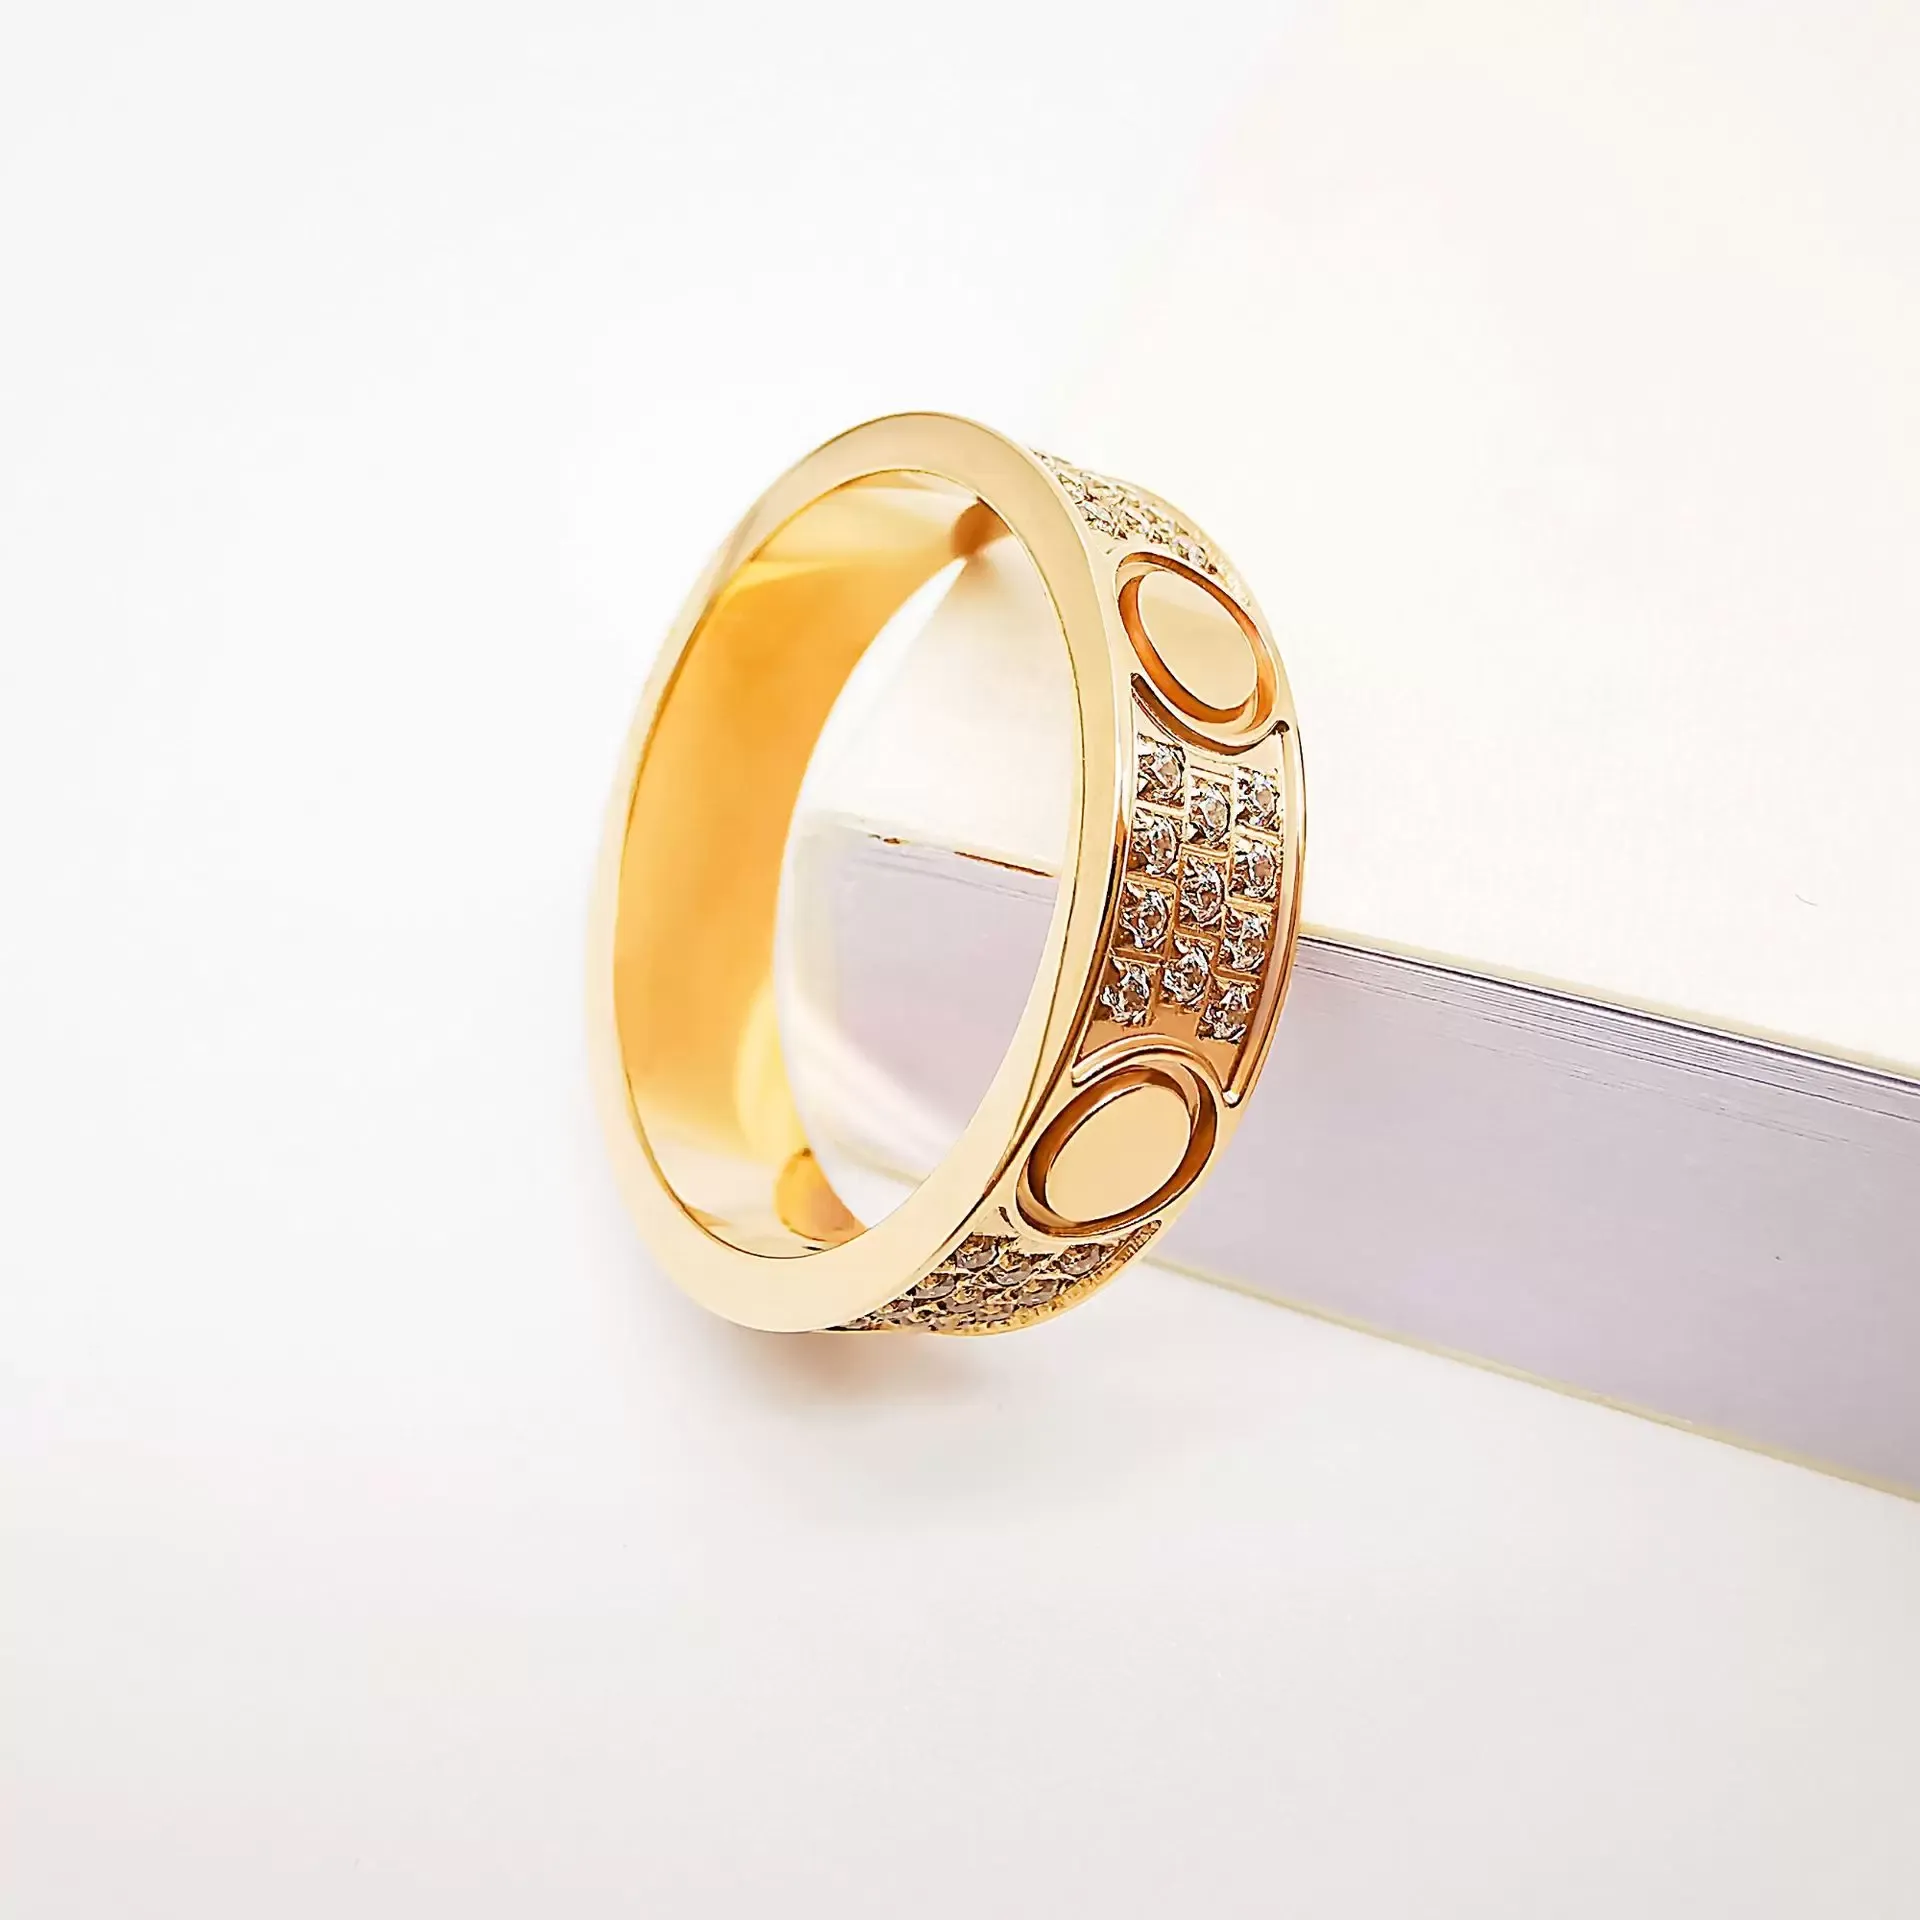 Love ring designer ring couples diamond screw ring ladies stainless steel zircon jewelry gifts ladies jewelry wholesale